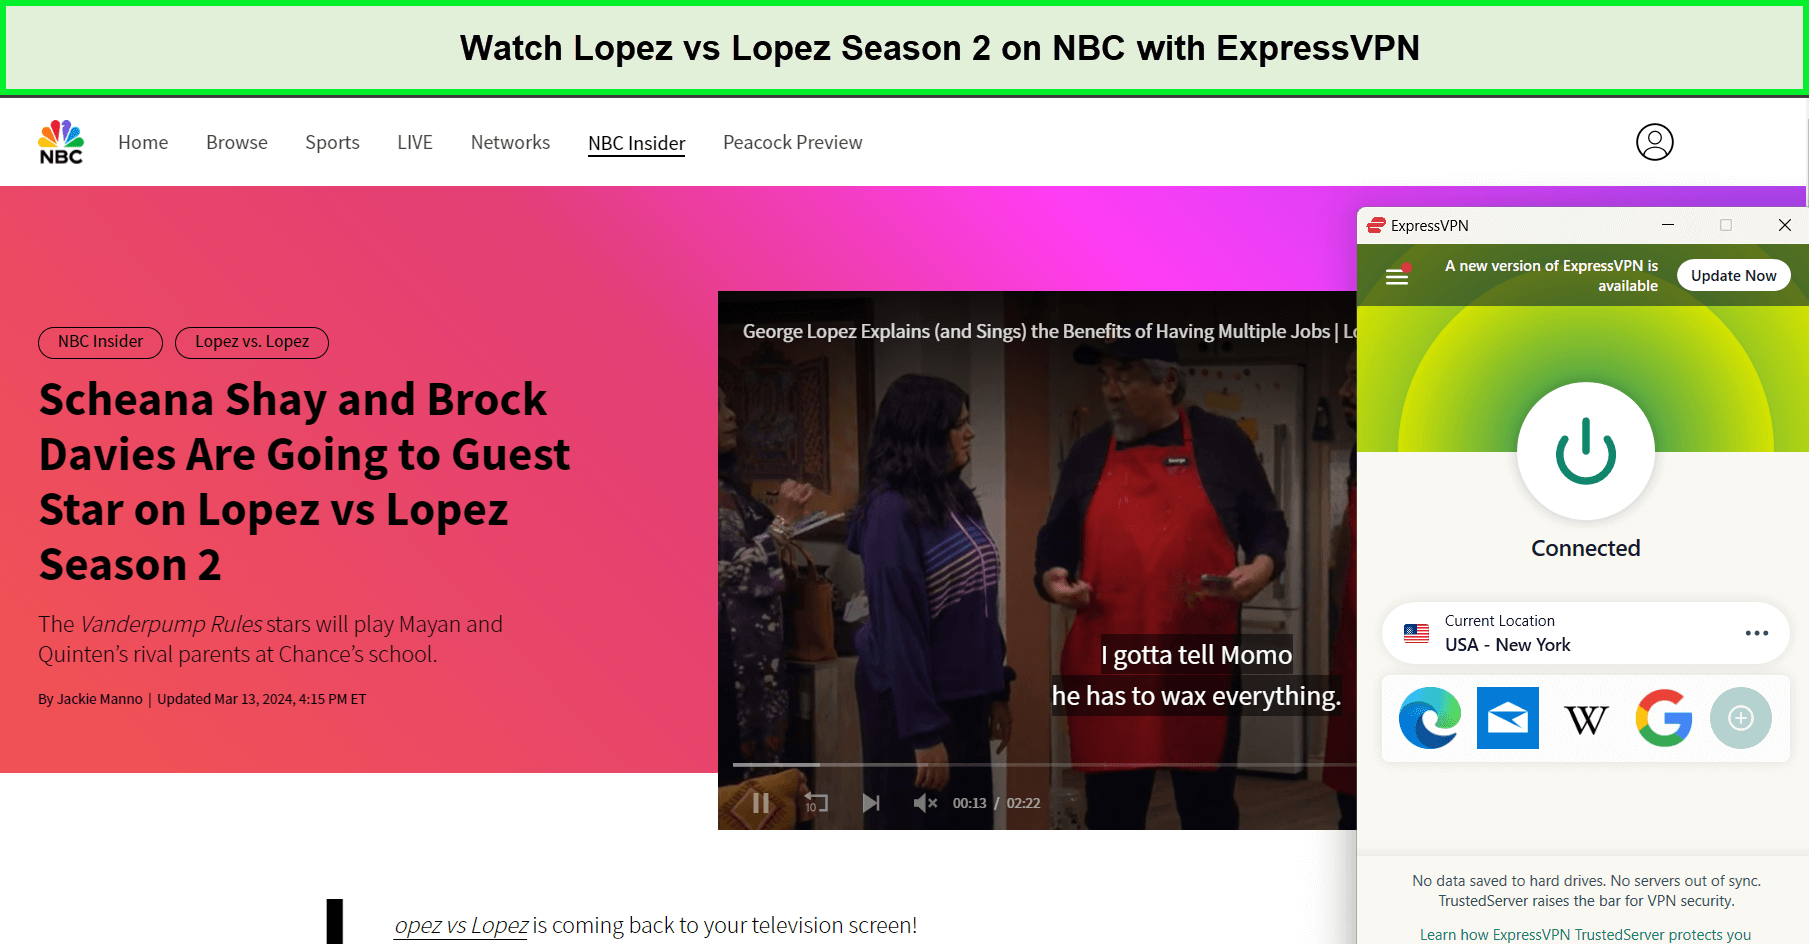 Watch-Lopez-vs-Lopez-Season-2-in-Hong Kong-on-NBC